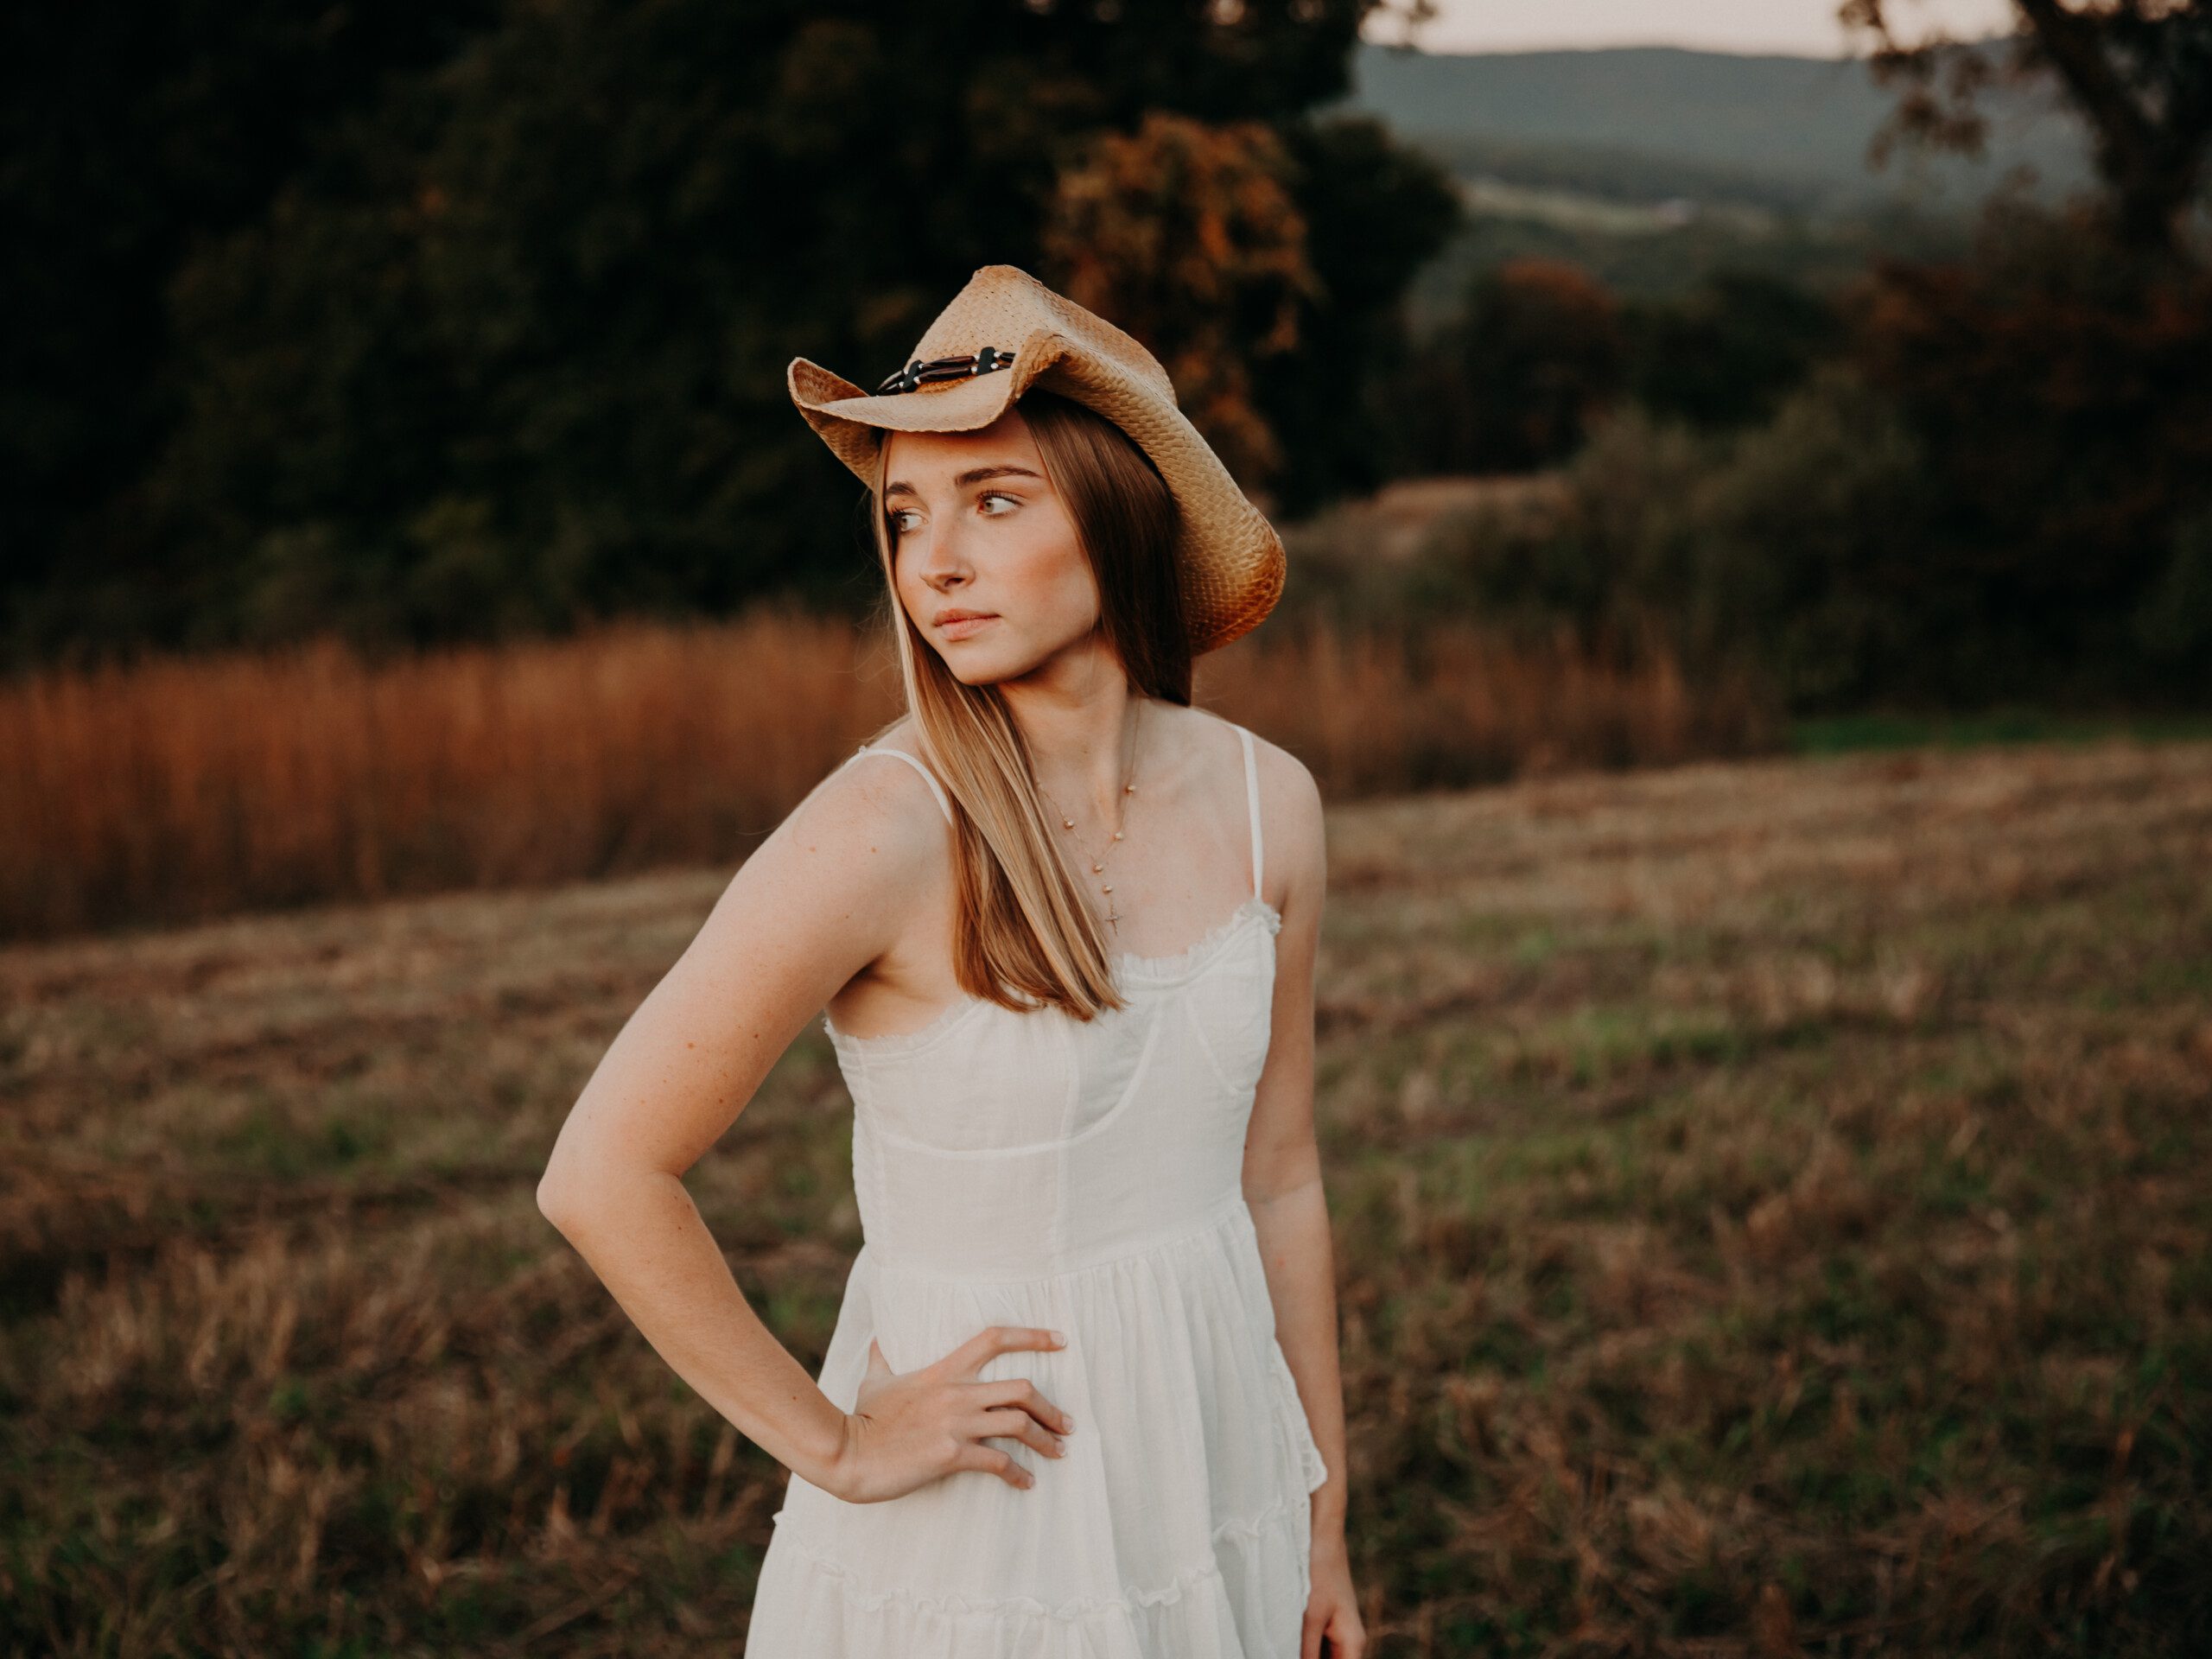 Bloomsburg Senior Photographer, senior photographer, benton senior photographer, bloomsburg photographer, senior girl in cowgirl hat, girl in a field